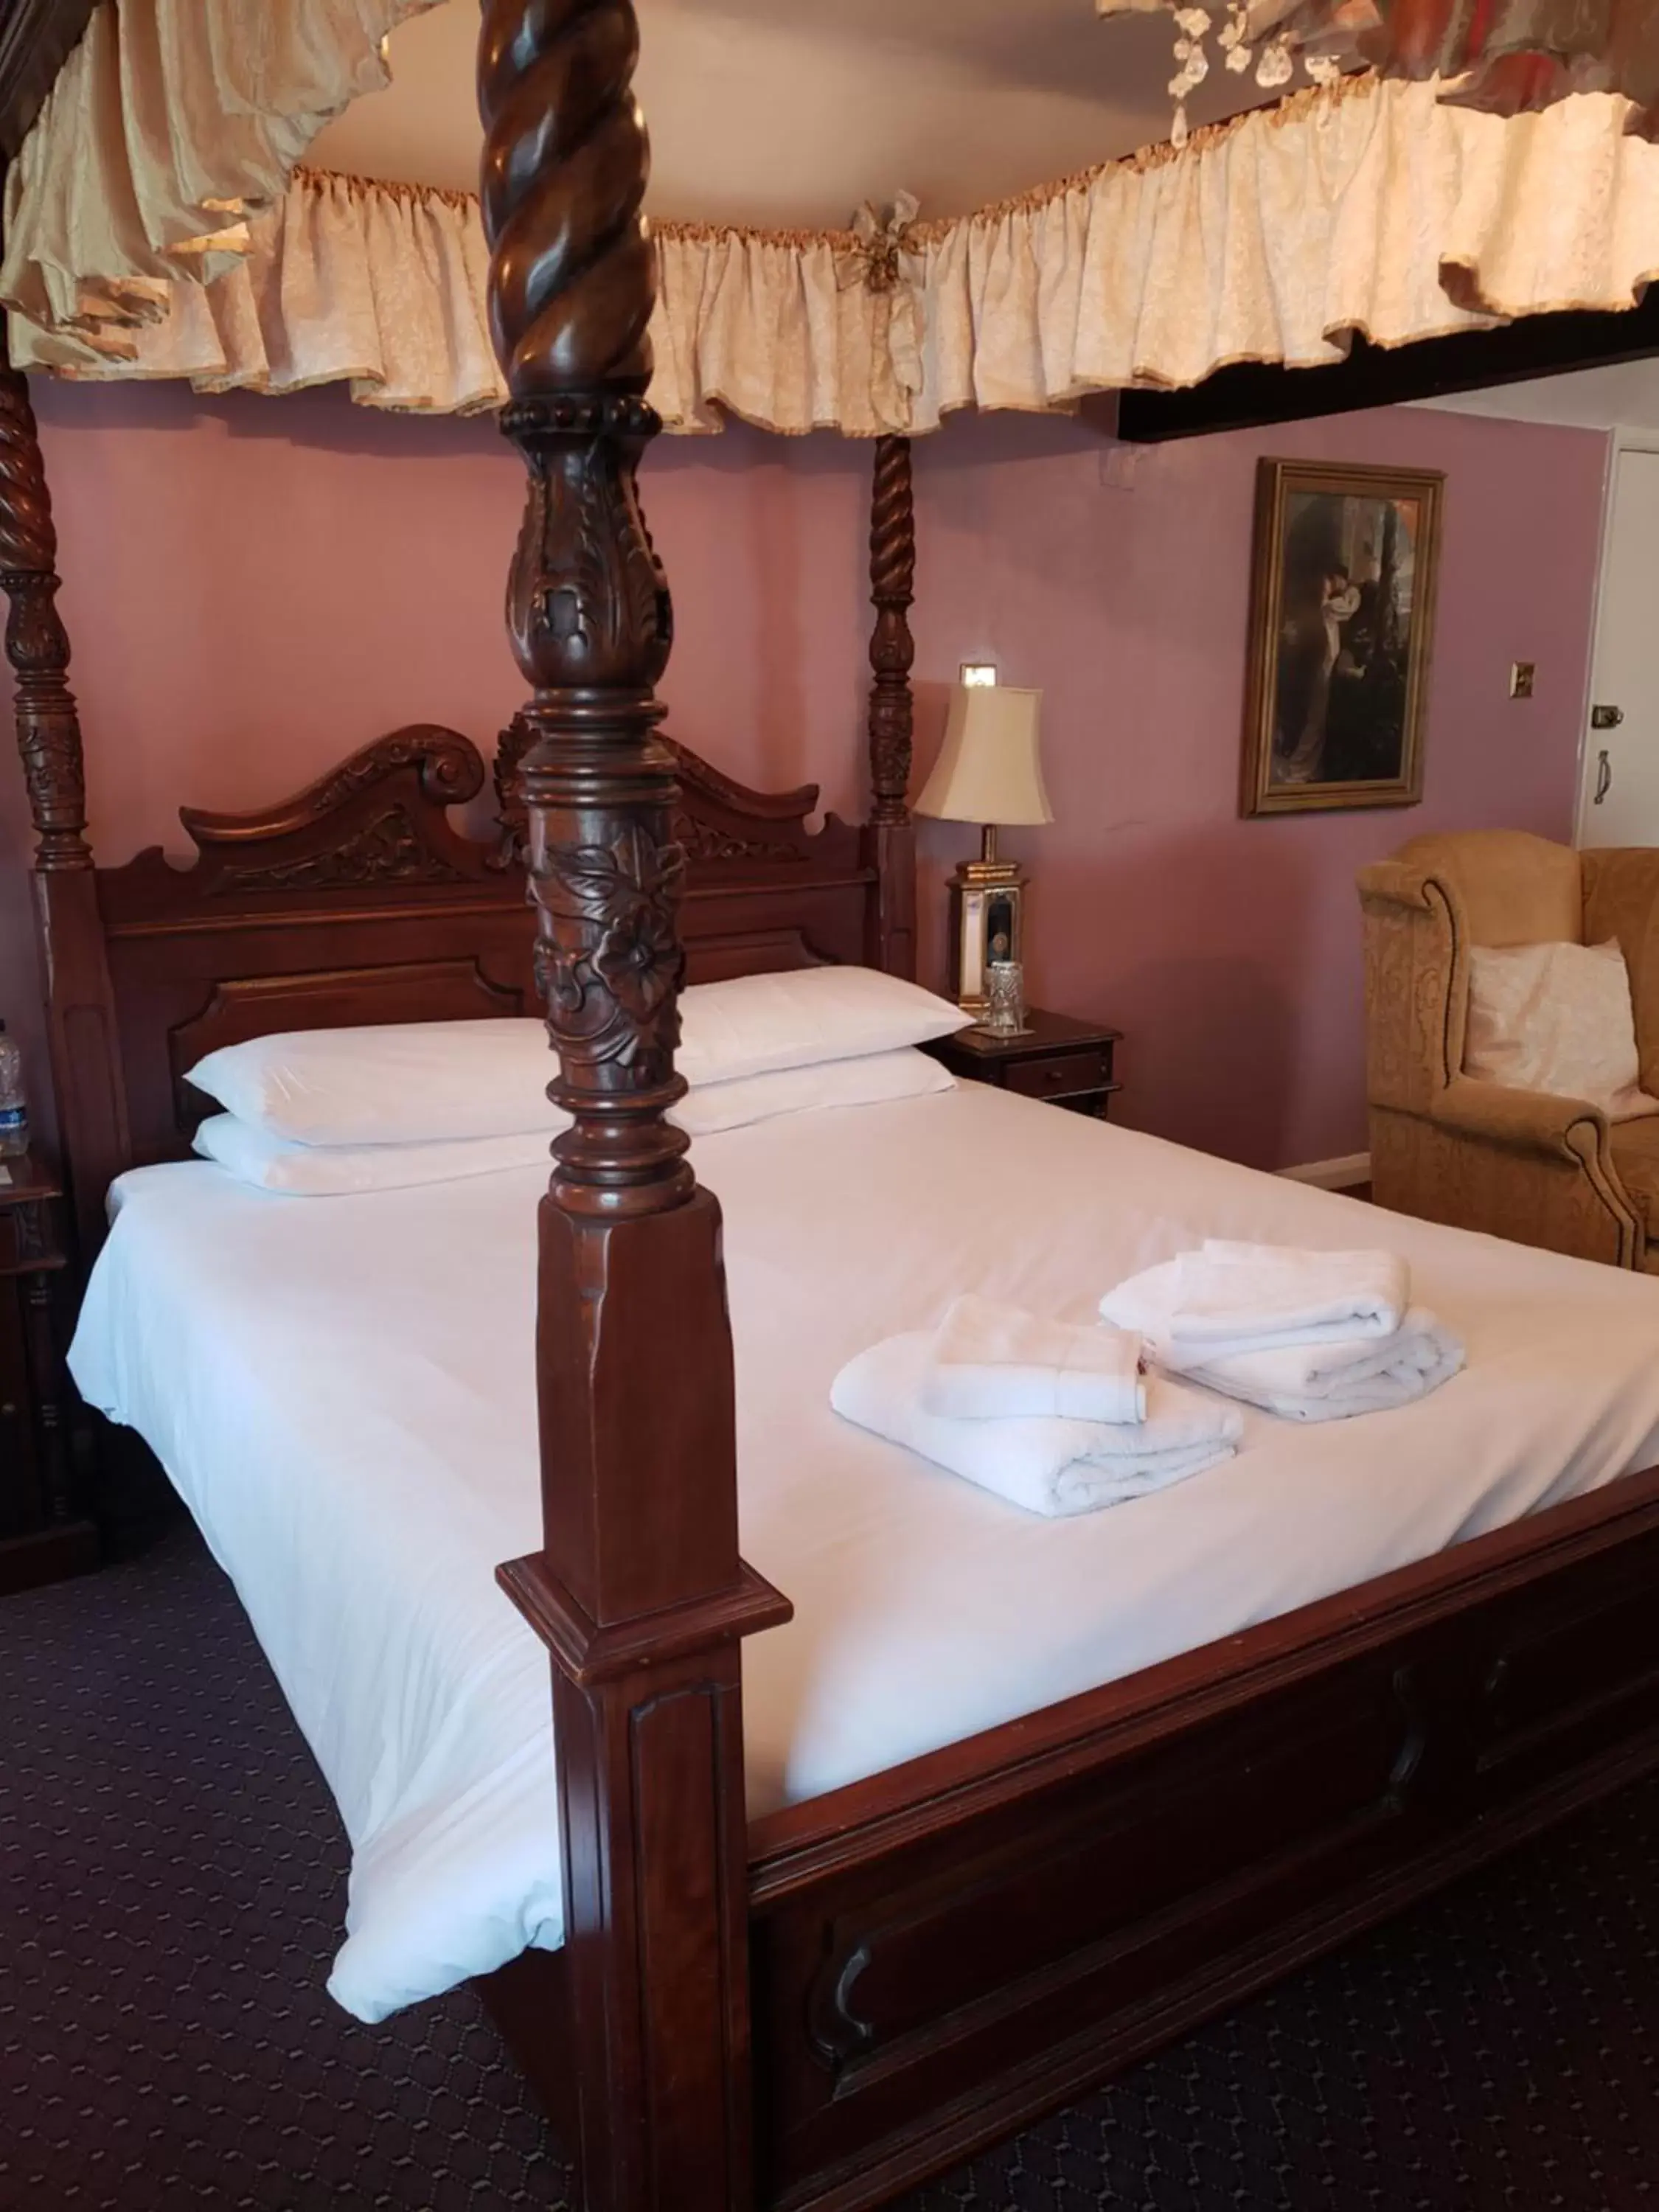 Bed in The Mary Arden Inn